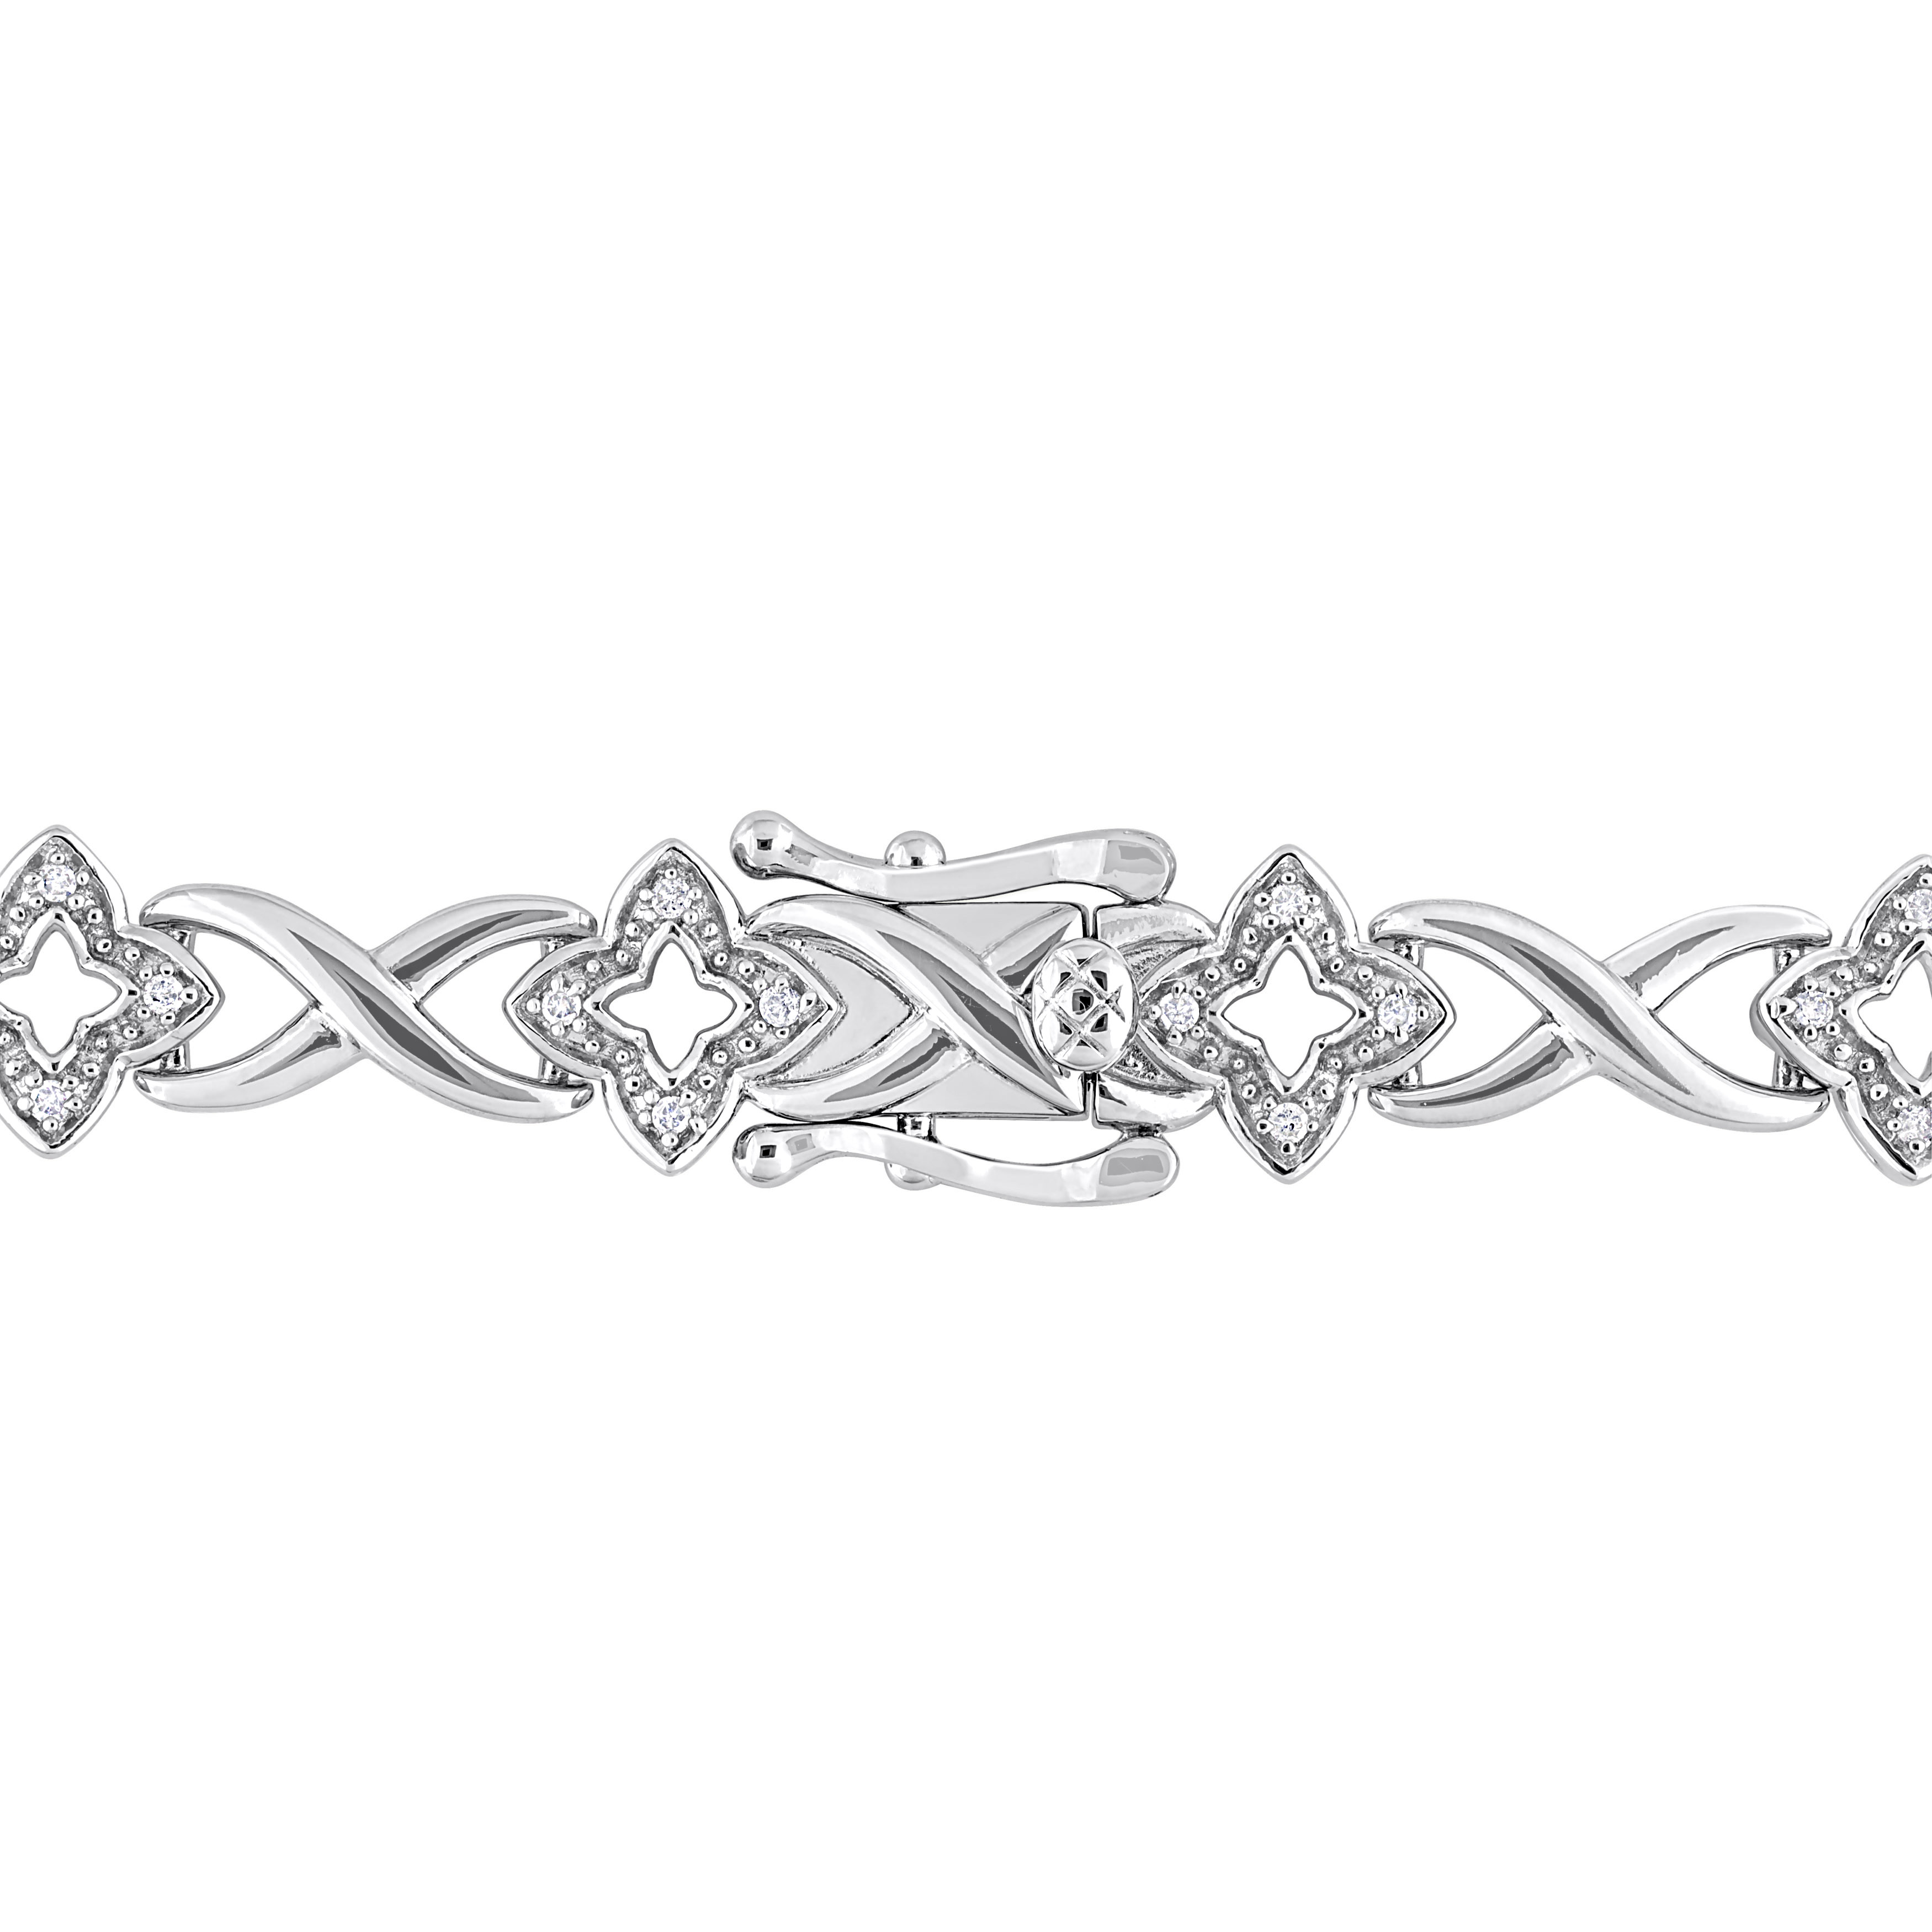 1/4 CT TDW Diamond Infinity Link Bracelet in Sterling Silver - 7.25 in.